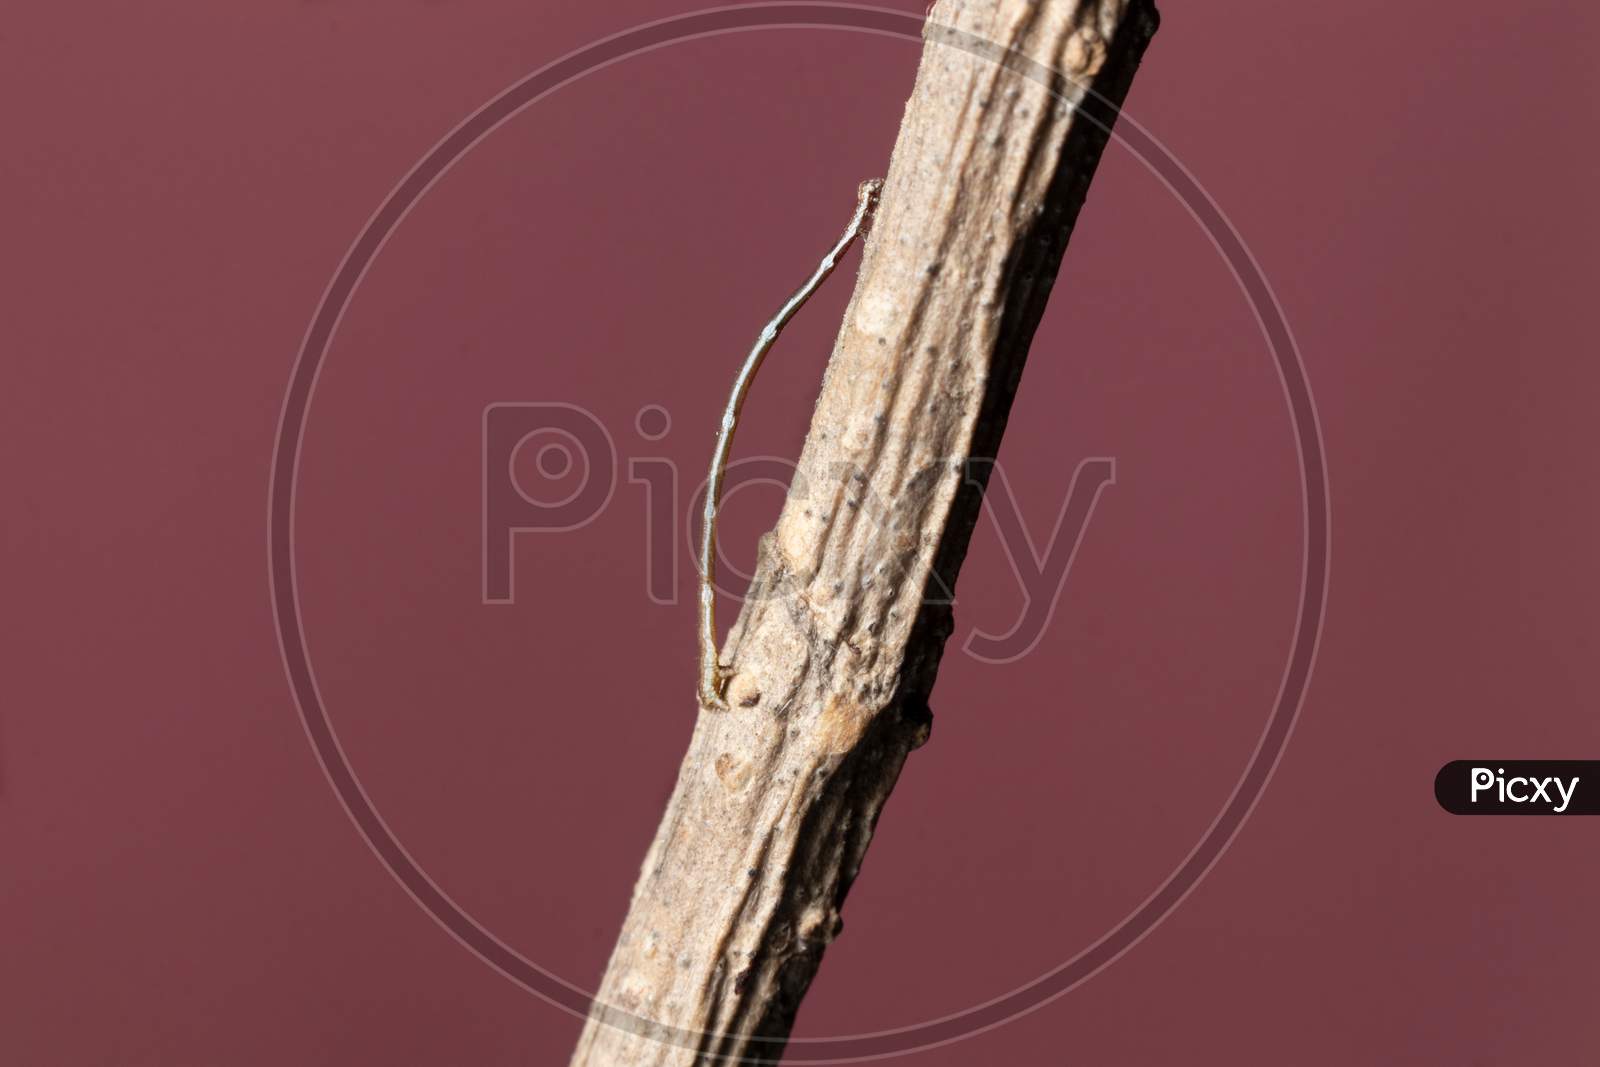 Geometrid Caterpillar Walking On A Dry Branch Stock Photo